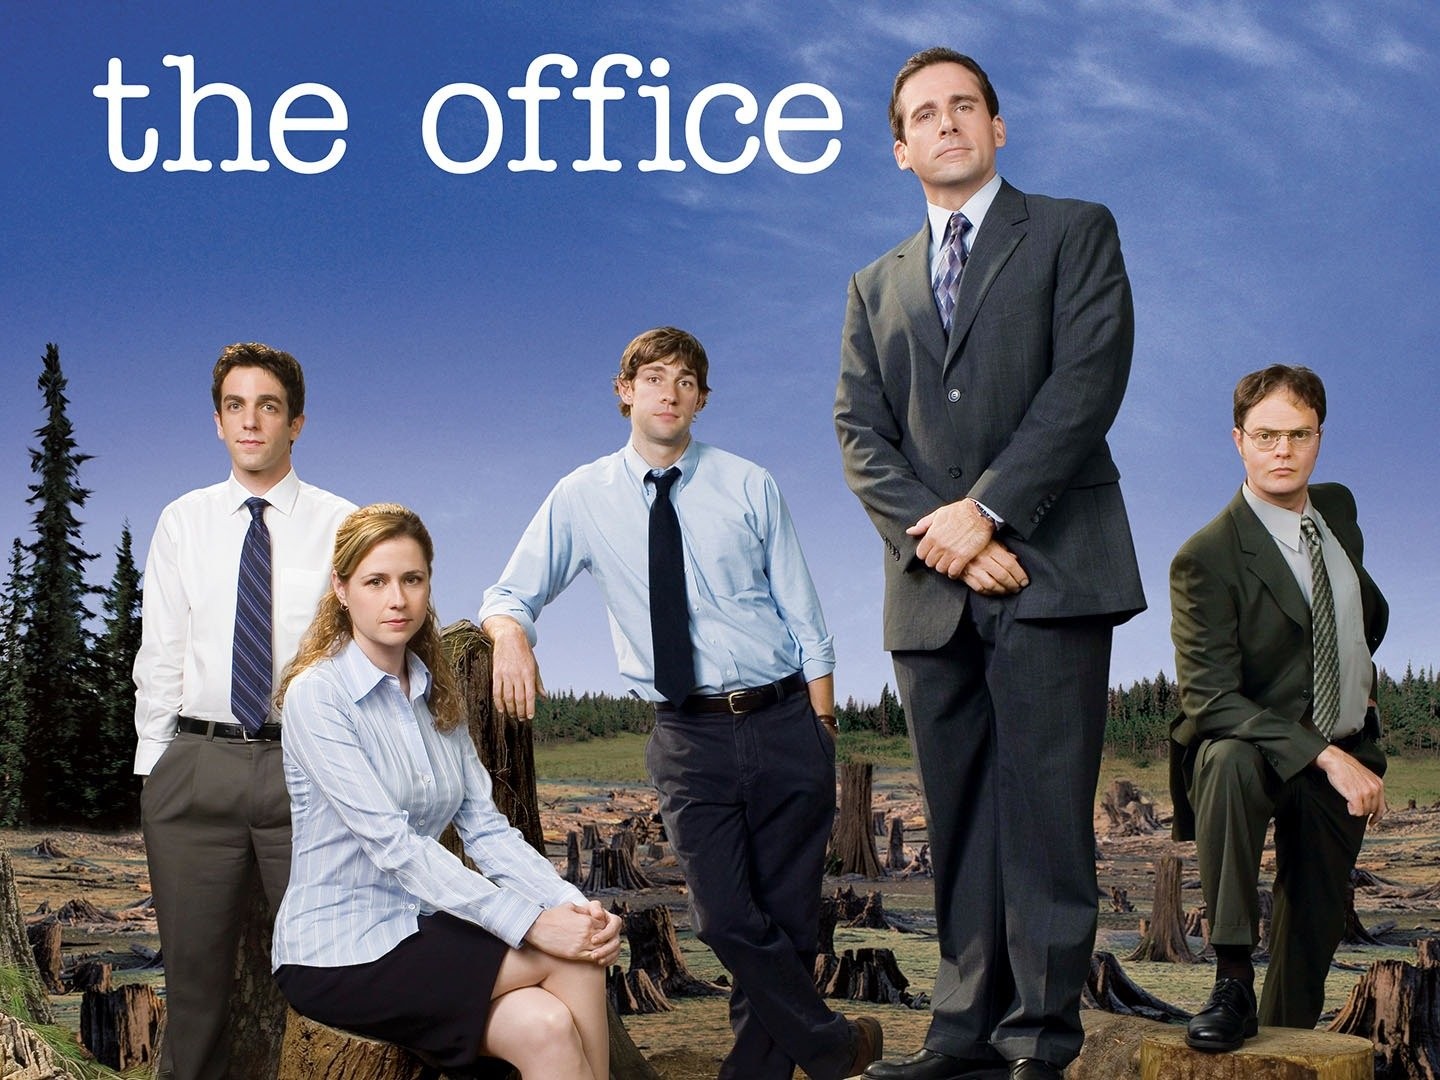 Ryan Howard  Office humor, Office jokes, The office show